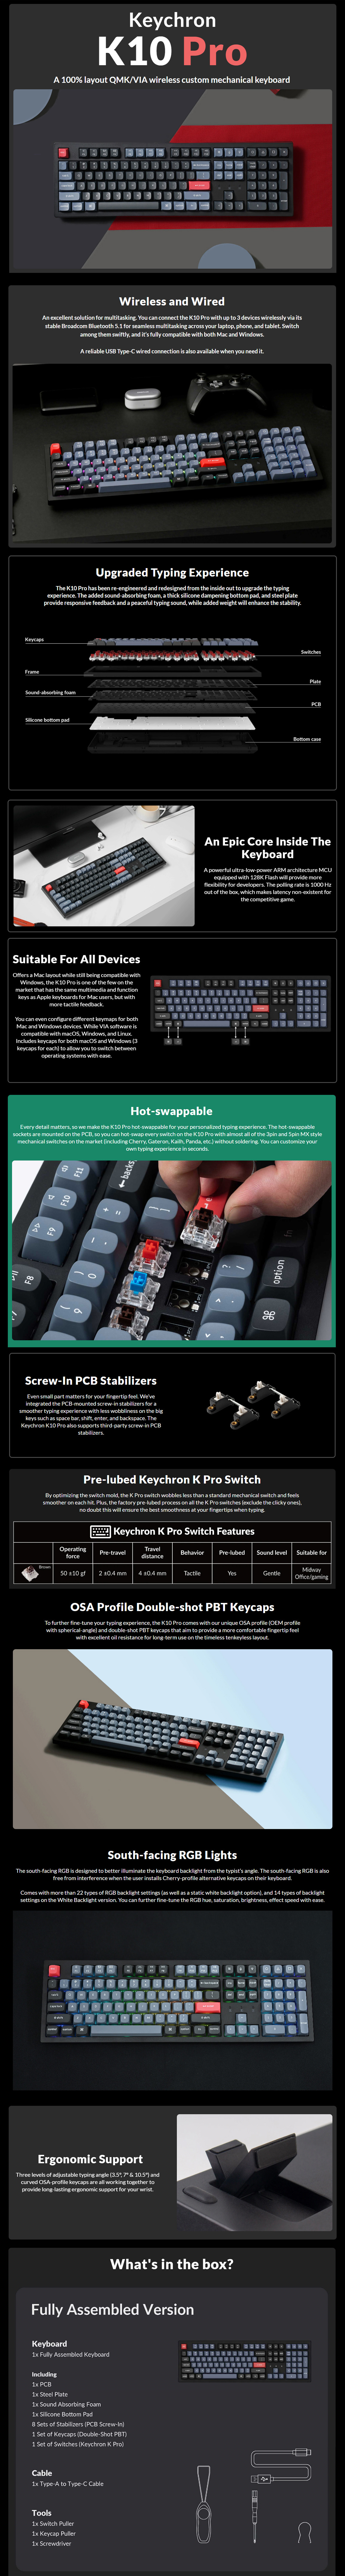 Keyboards-Keychron-K10-Pro-QMK-VIA-Wireless-Keyboard-RGB-Backlit-Hot-Swappable-Keychron-K-Pro-Mechanical-Keyboard-Brown-Switch-K10P-H3-1